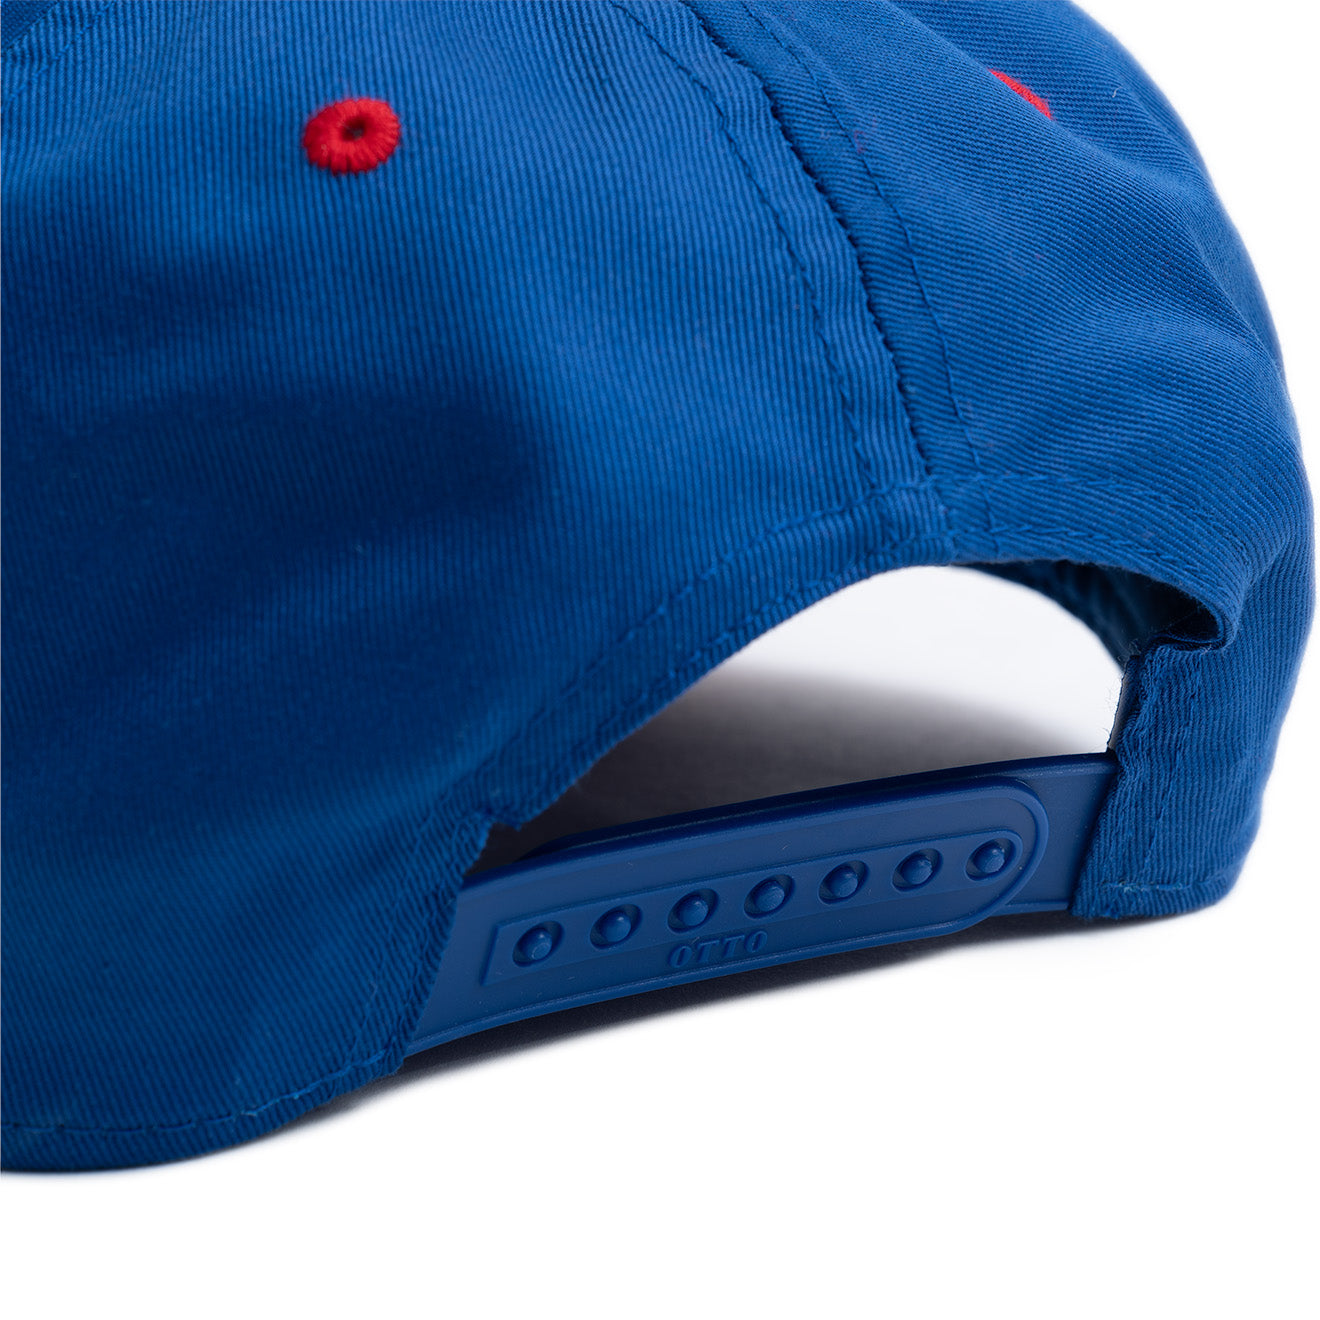 TLN Monogram Hat (Royal/Red)